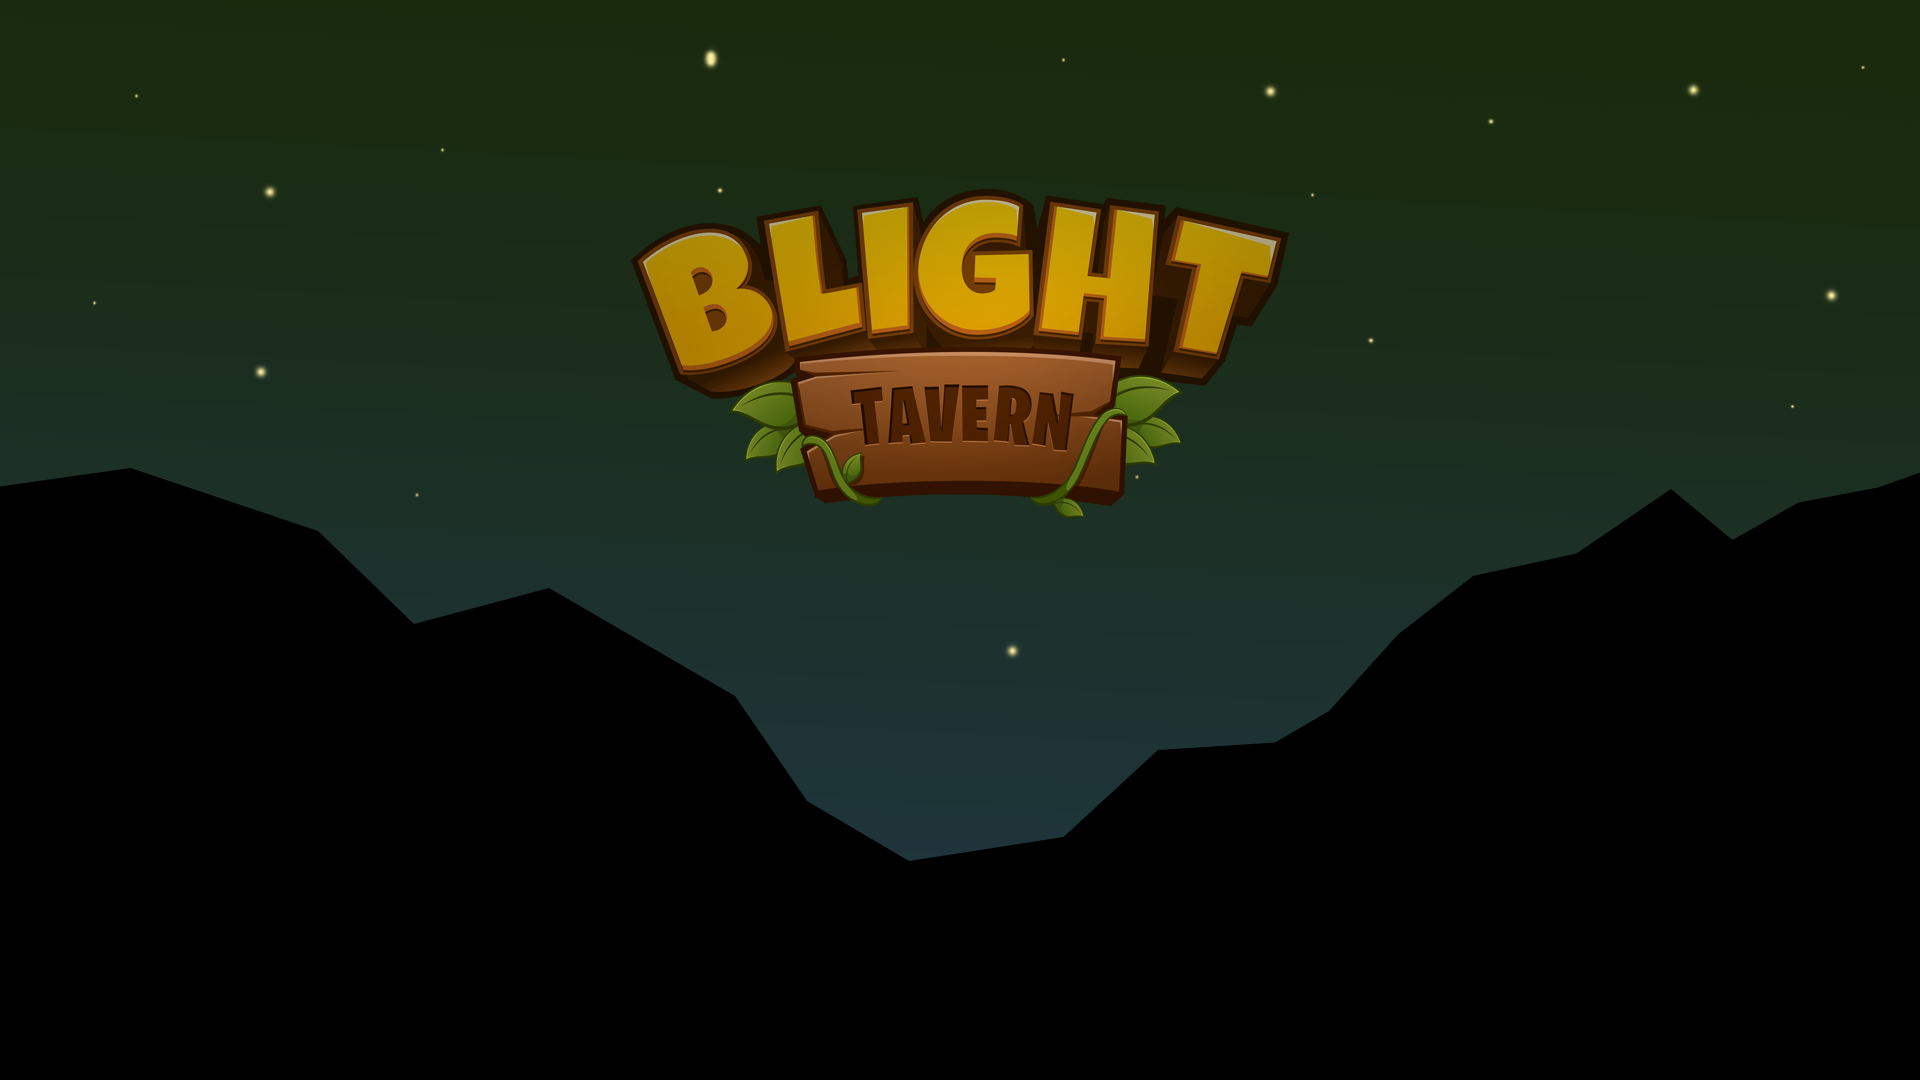 Blight Tavern